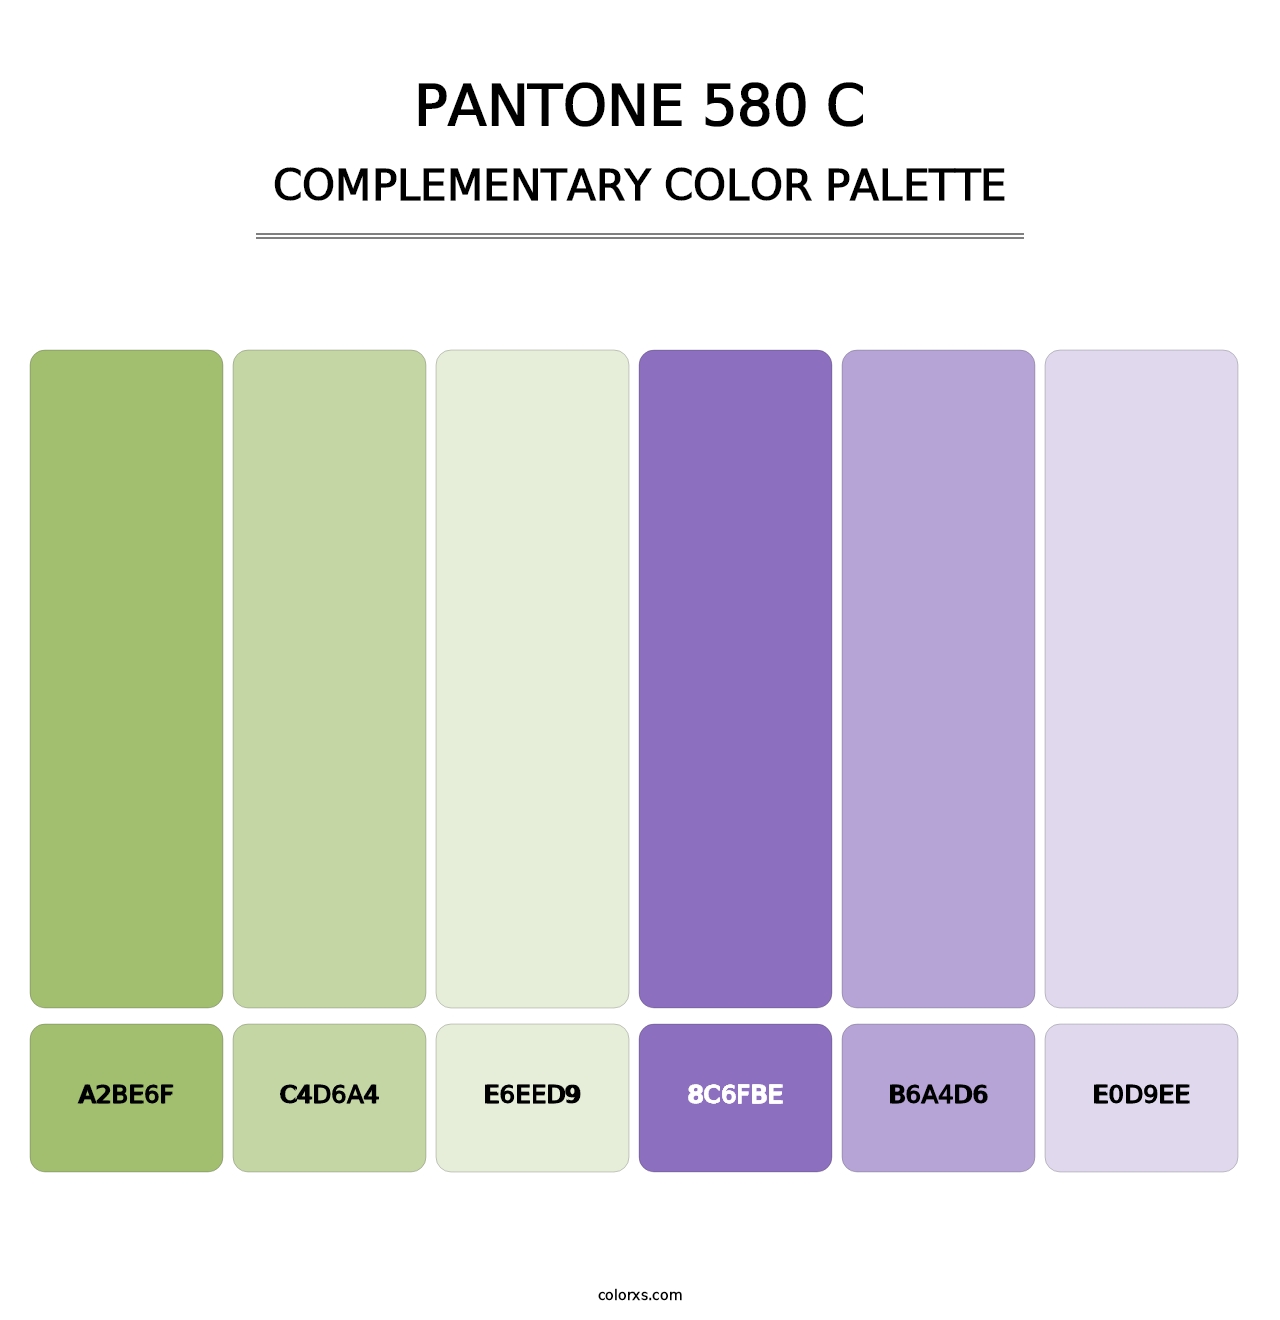 PANTONE 580 C - Complementary Color Palette